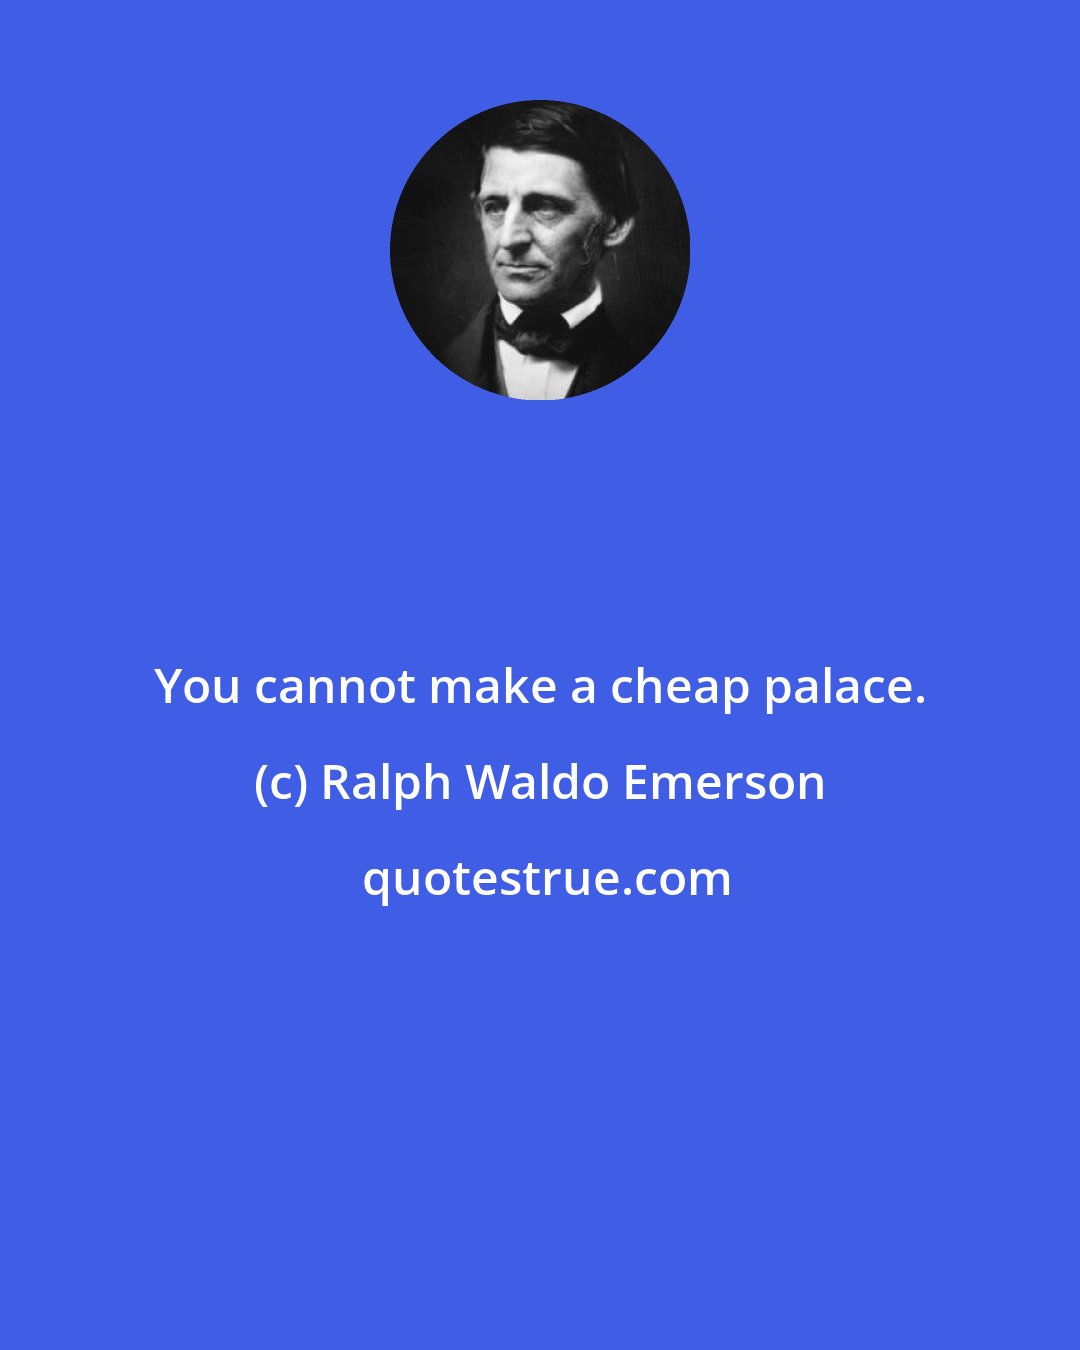 Ralph Waldo Emerson: You cannot make a cheap palace.